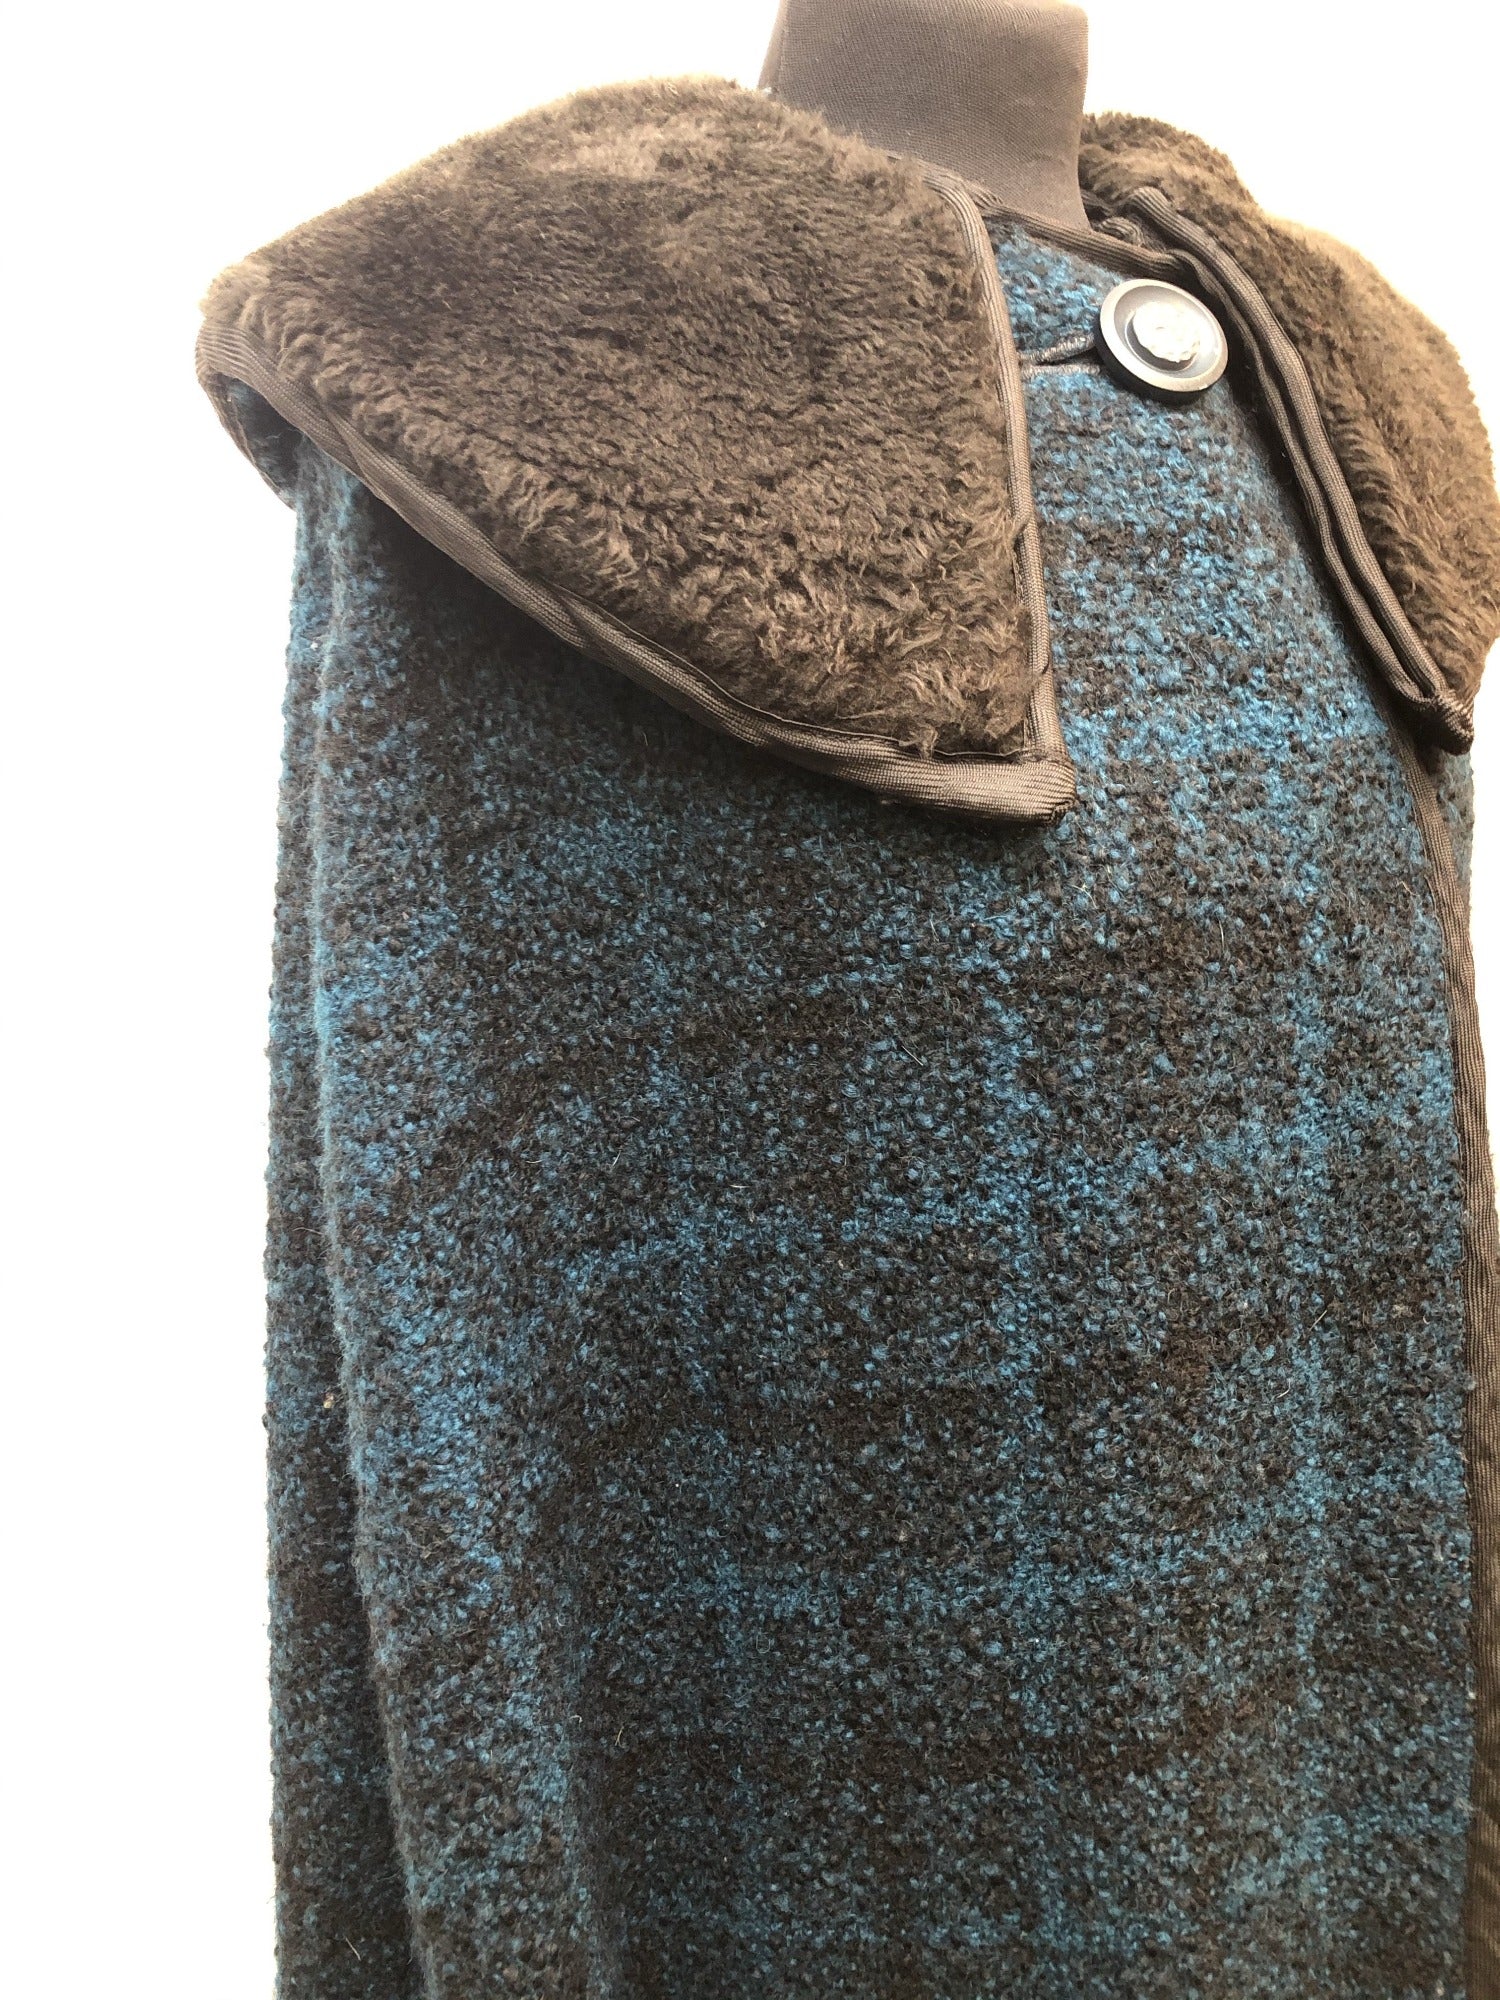 womens  Vintage  Tweed  Otterburn Tweed  One size  long cape  Green  floor length  faux fur  cape  Blue  50s  1950s urban village vintage